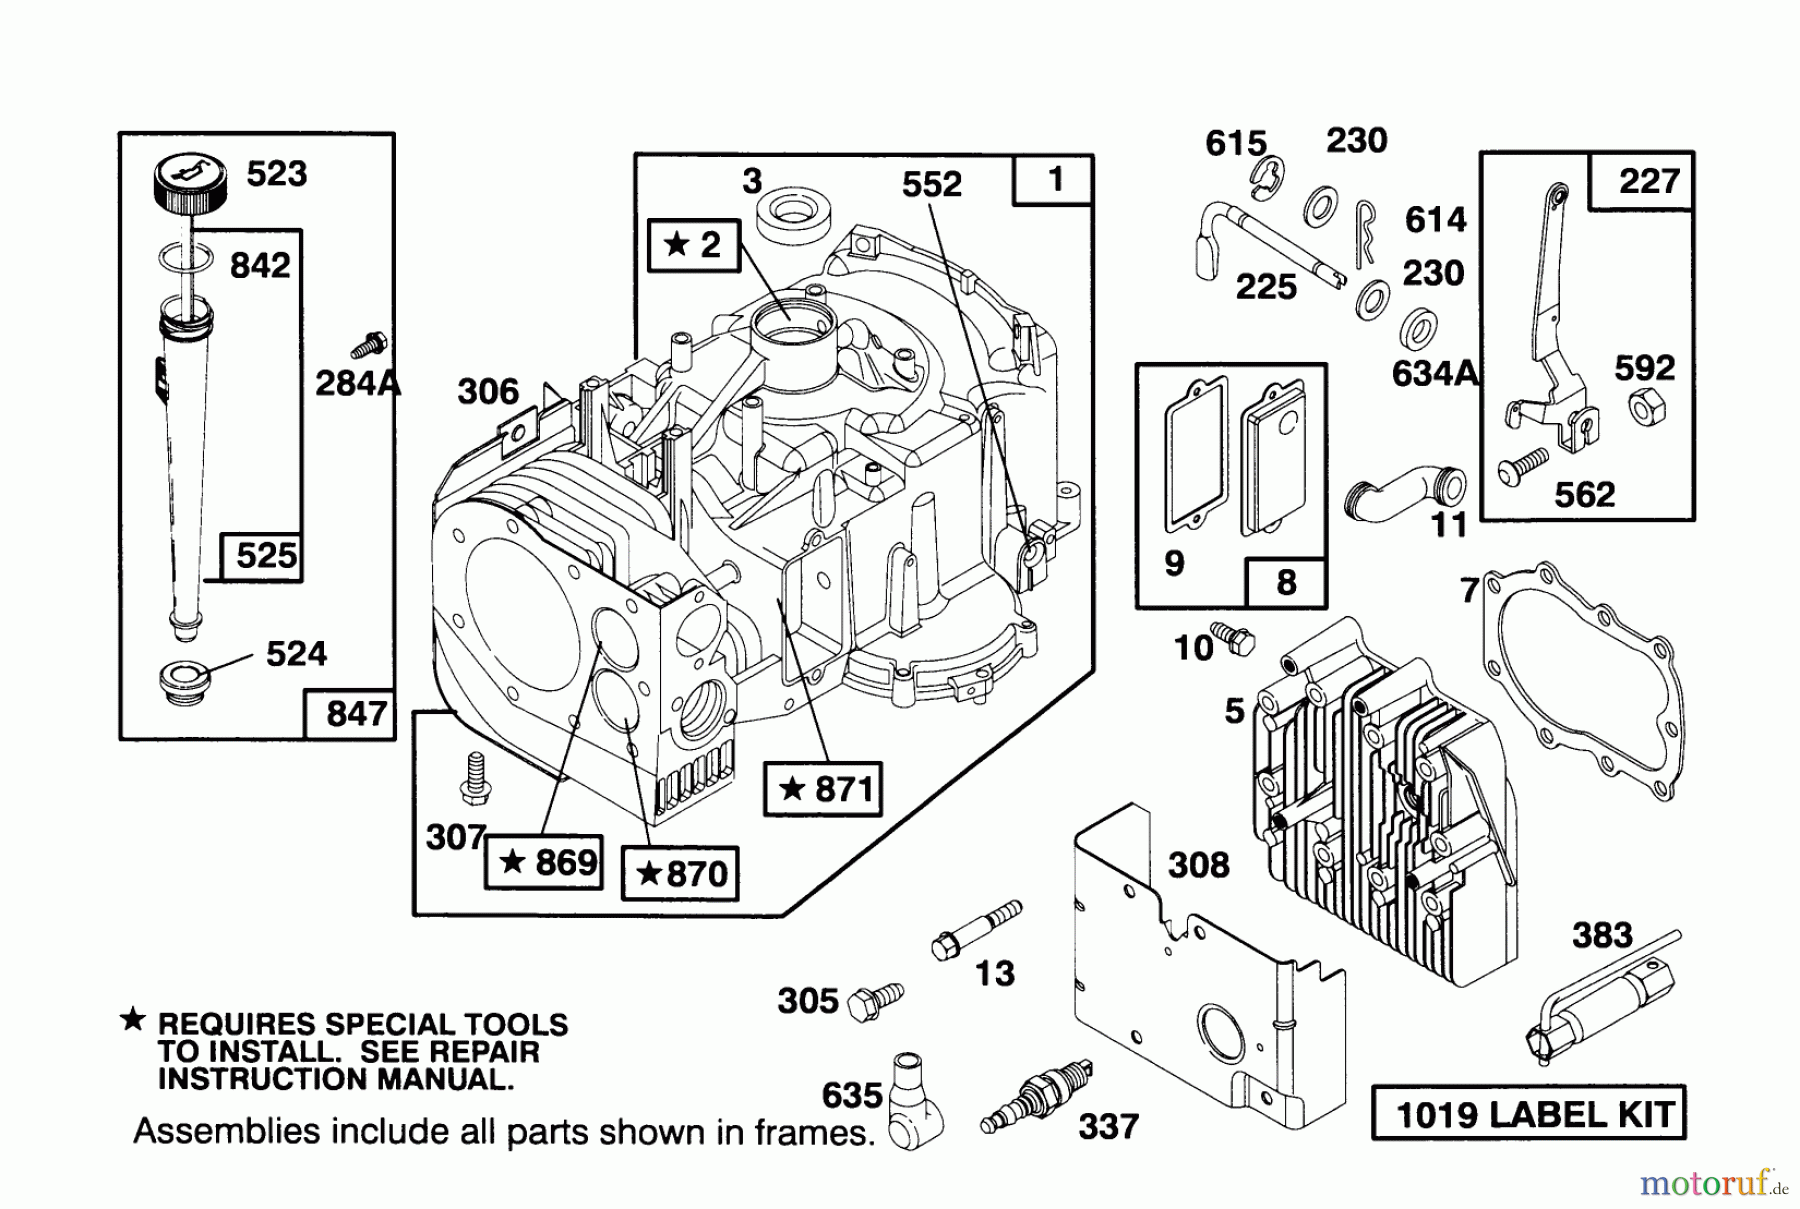  Toro Neu Mowers, Lawn & Garden Tractor Seite 1 71184 (12-38XL) - Toro 12-38XL Lawn Tractor, 1996 (6900001-6999999) ENGINE BRIGGS & STRATTON MODEL 286707-0453-01 #1